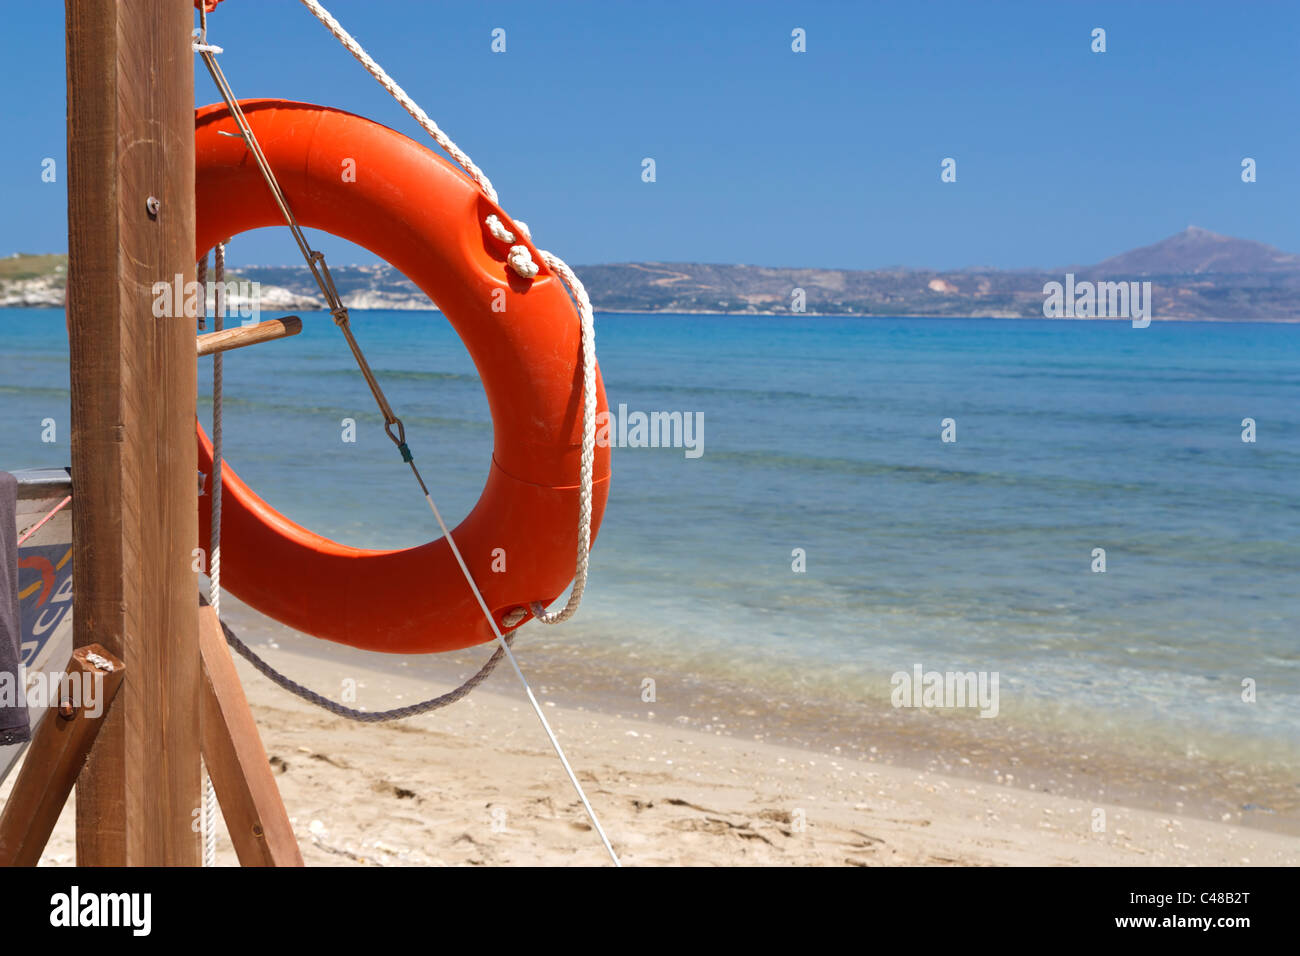 Orange life-saver at the beach of Almirida, Crete, Greece. Stock Photo